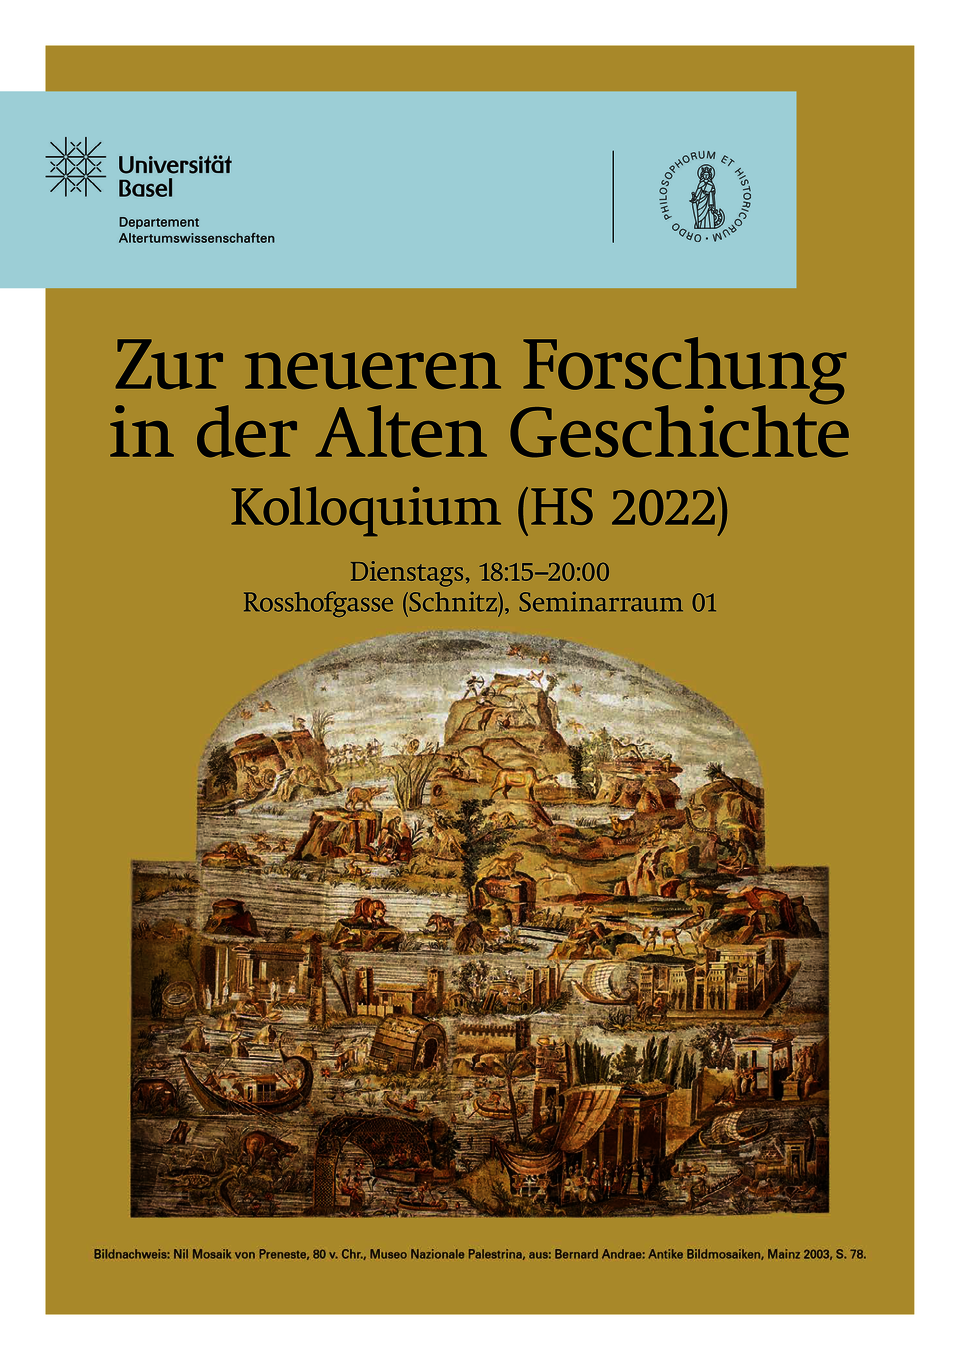 Kolloquium Alte Geschichte HS22